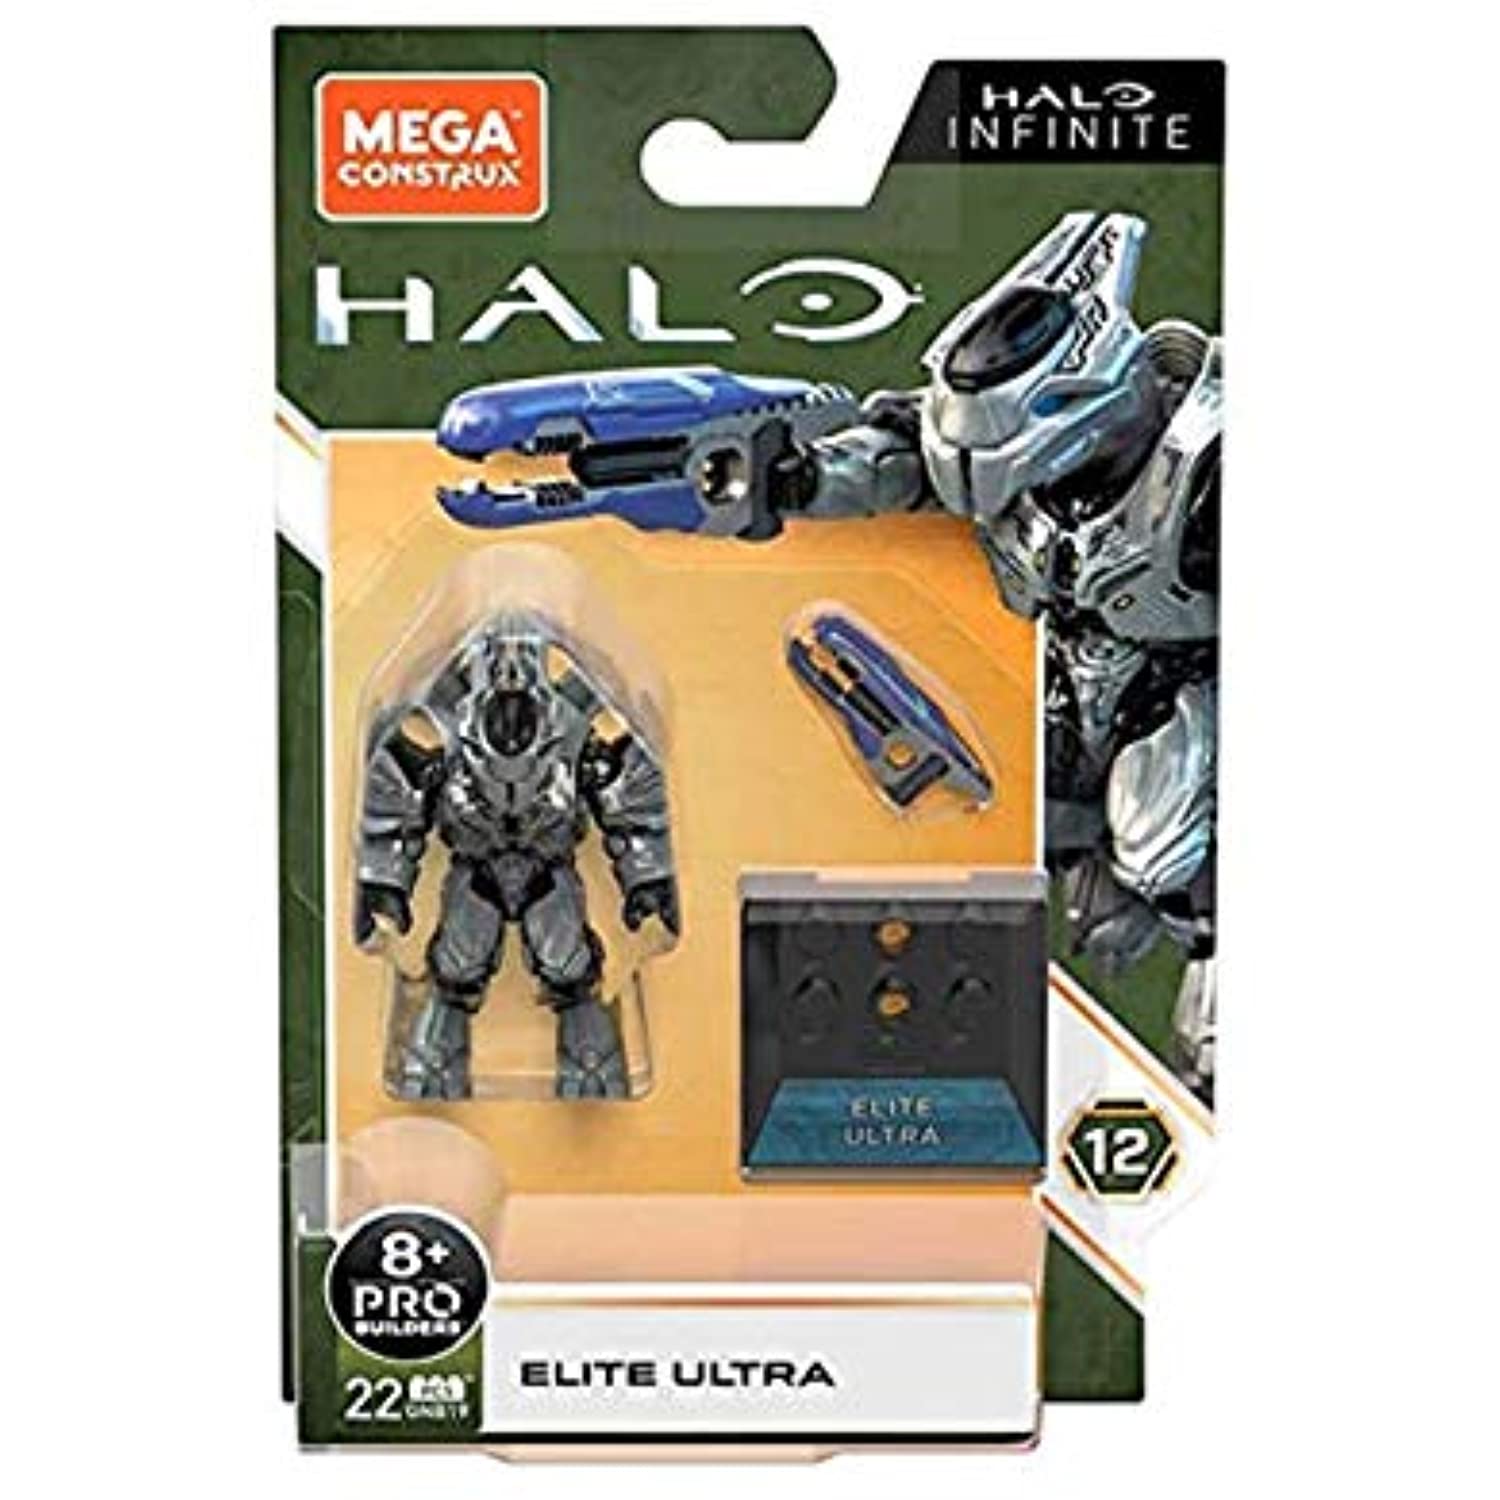 Mega Construx Halo Infinite Elite Ultra Minifigure